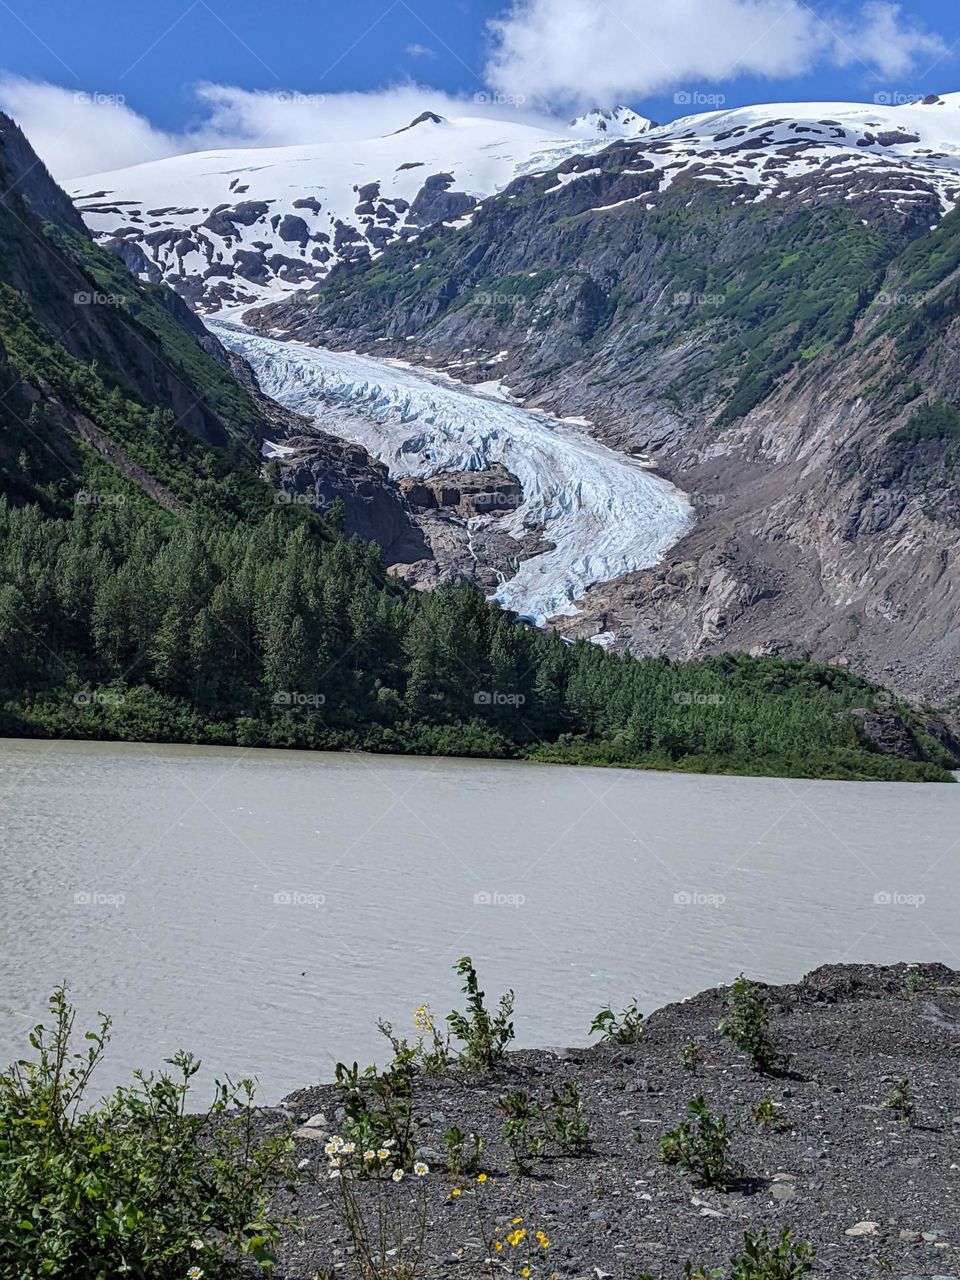 glacier tongue coming down the mountain